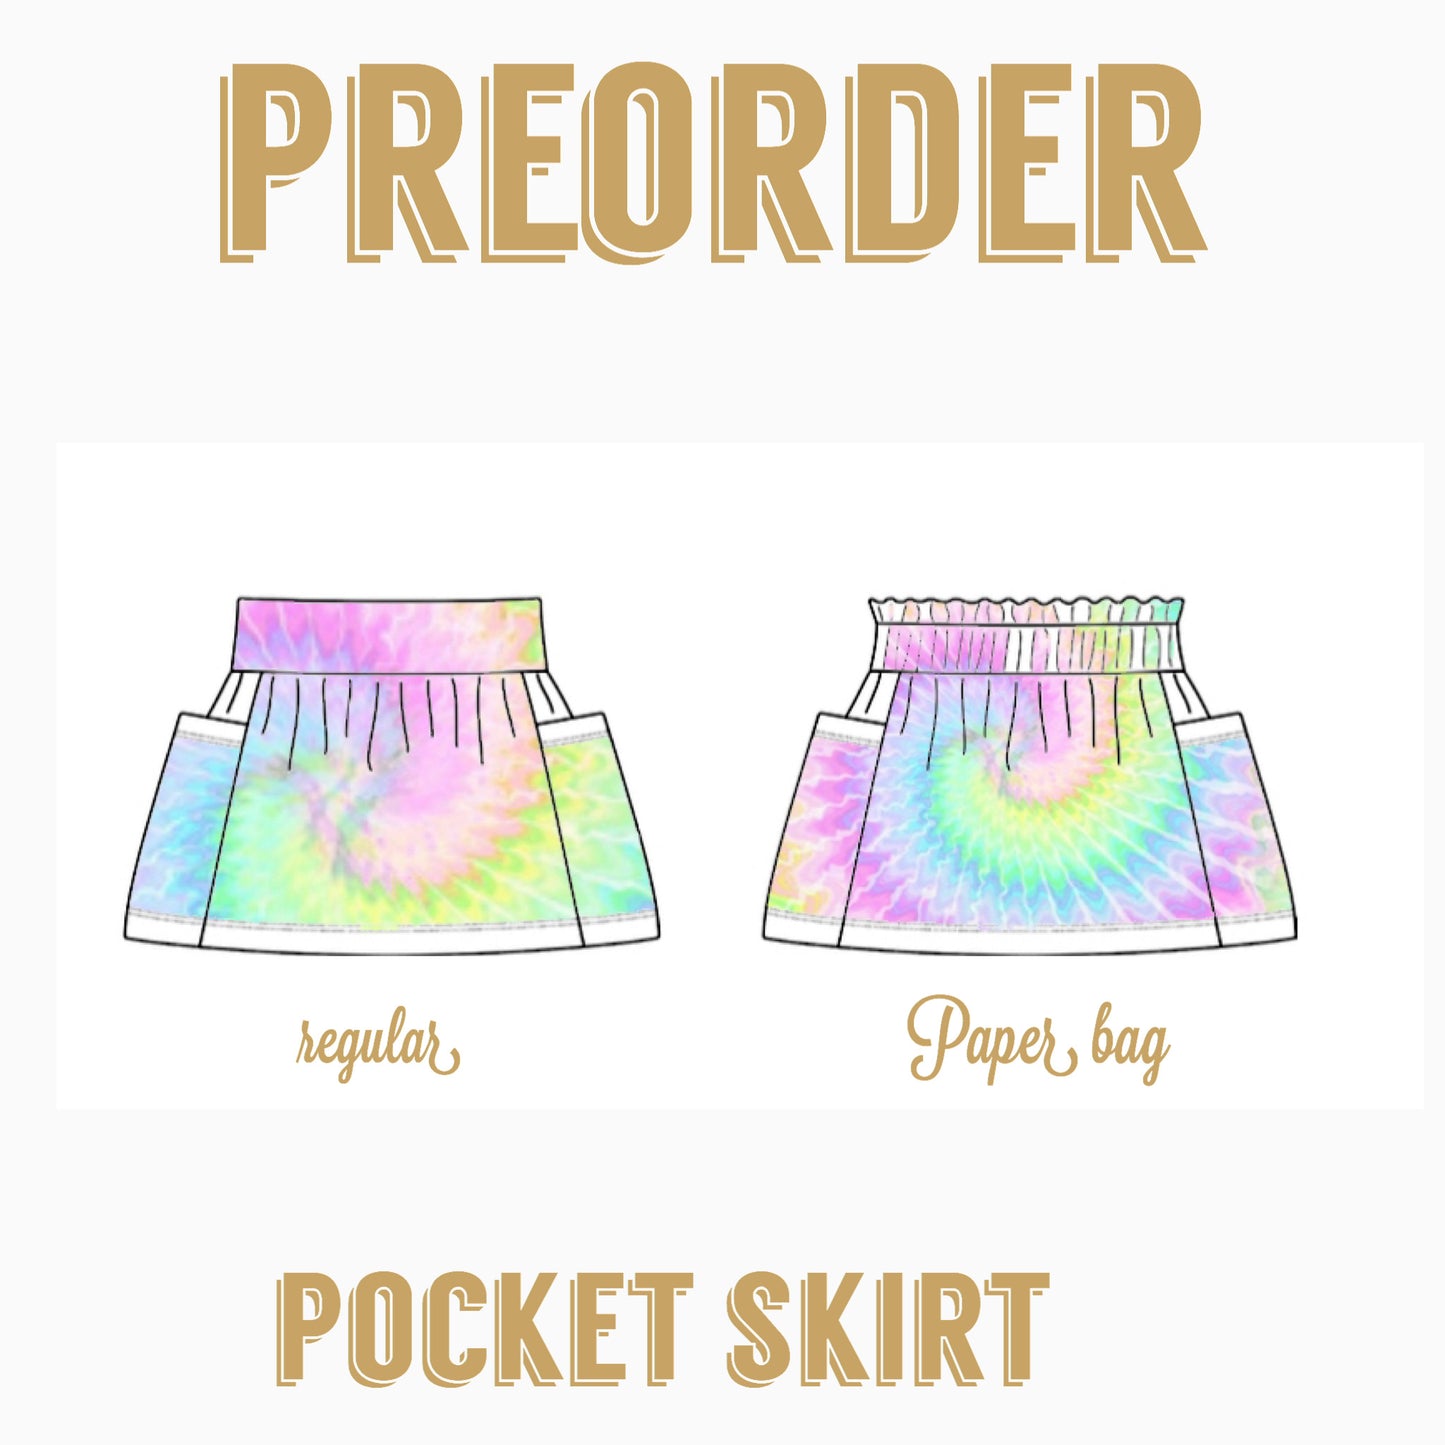 EPIC PREORDER| Pocket skirt